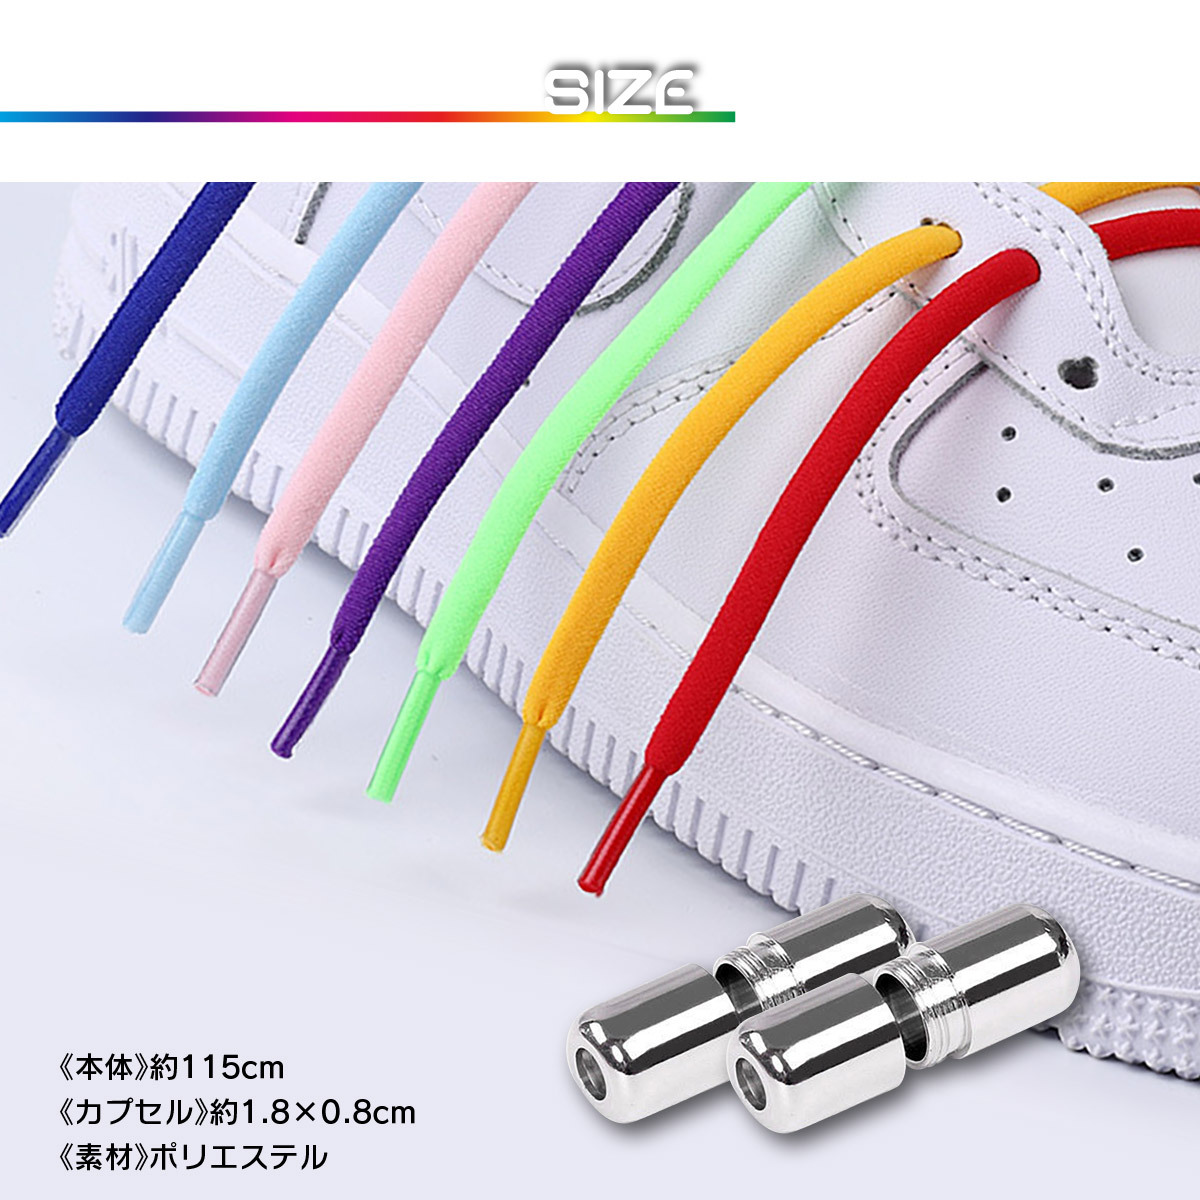  shoe lace .. not shoe race shoes cord metal fittings stylish rubber child adult men's lady's Kids flexible sneakers 